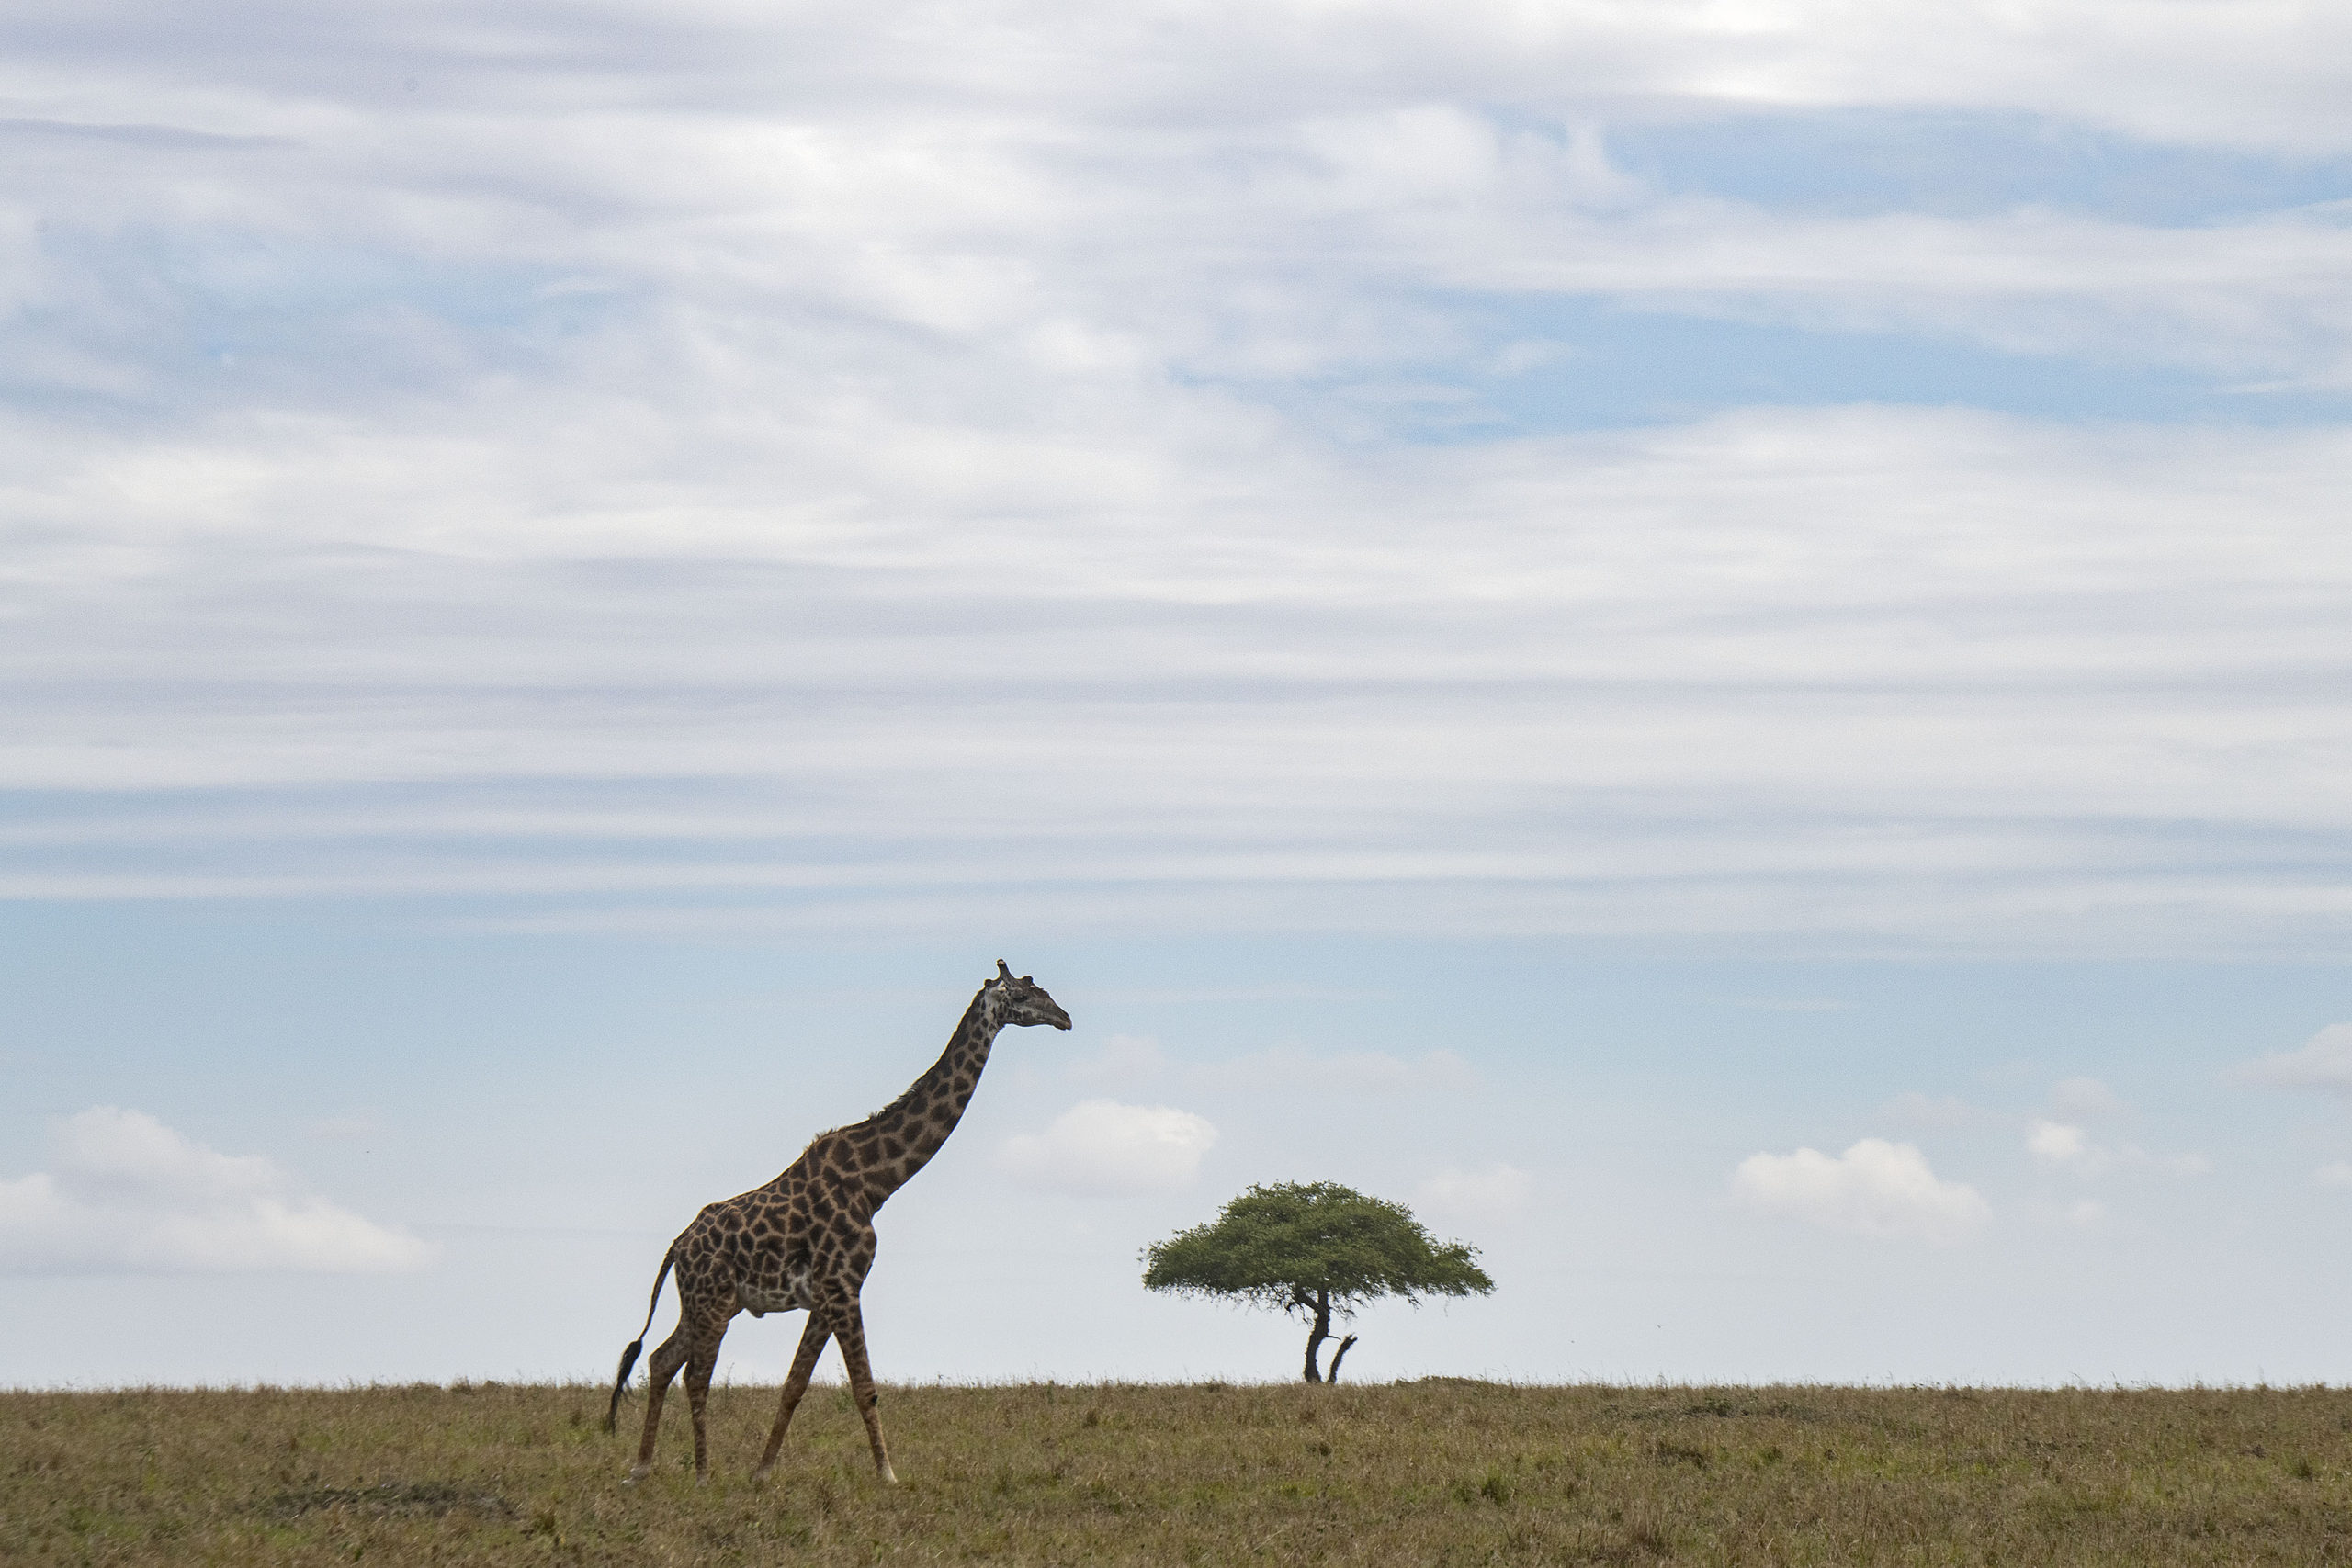 A scene from a safari at the Fig Tree Lodge in the Maasai Mara in Nairobi, Kenya.